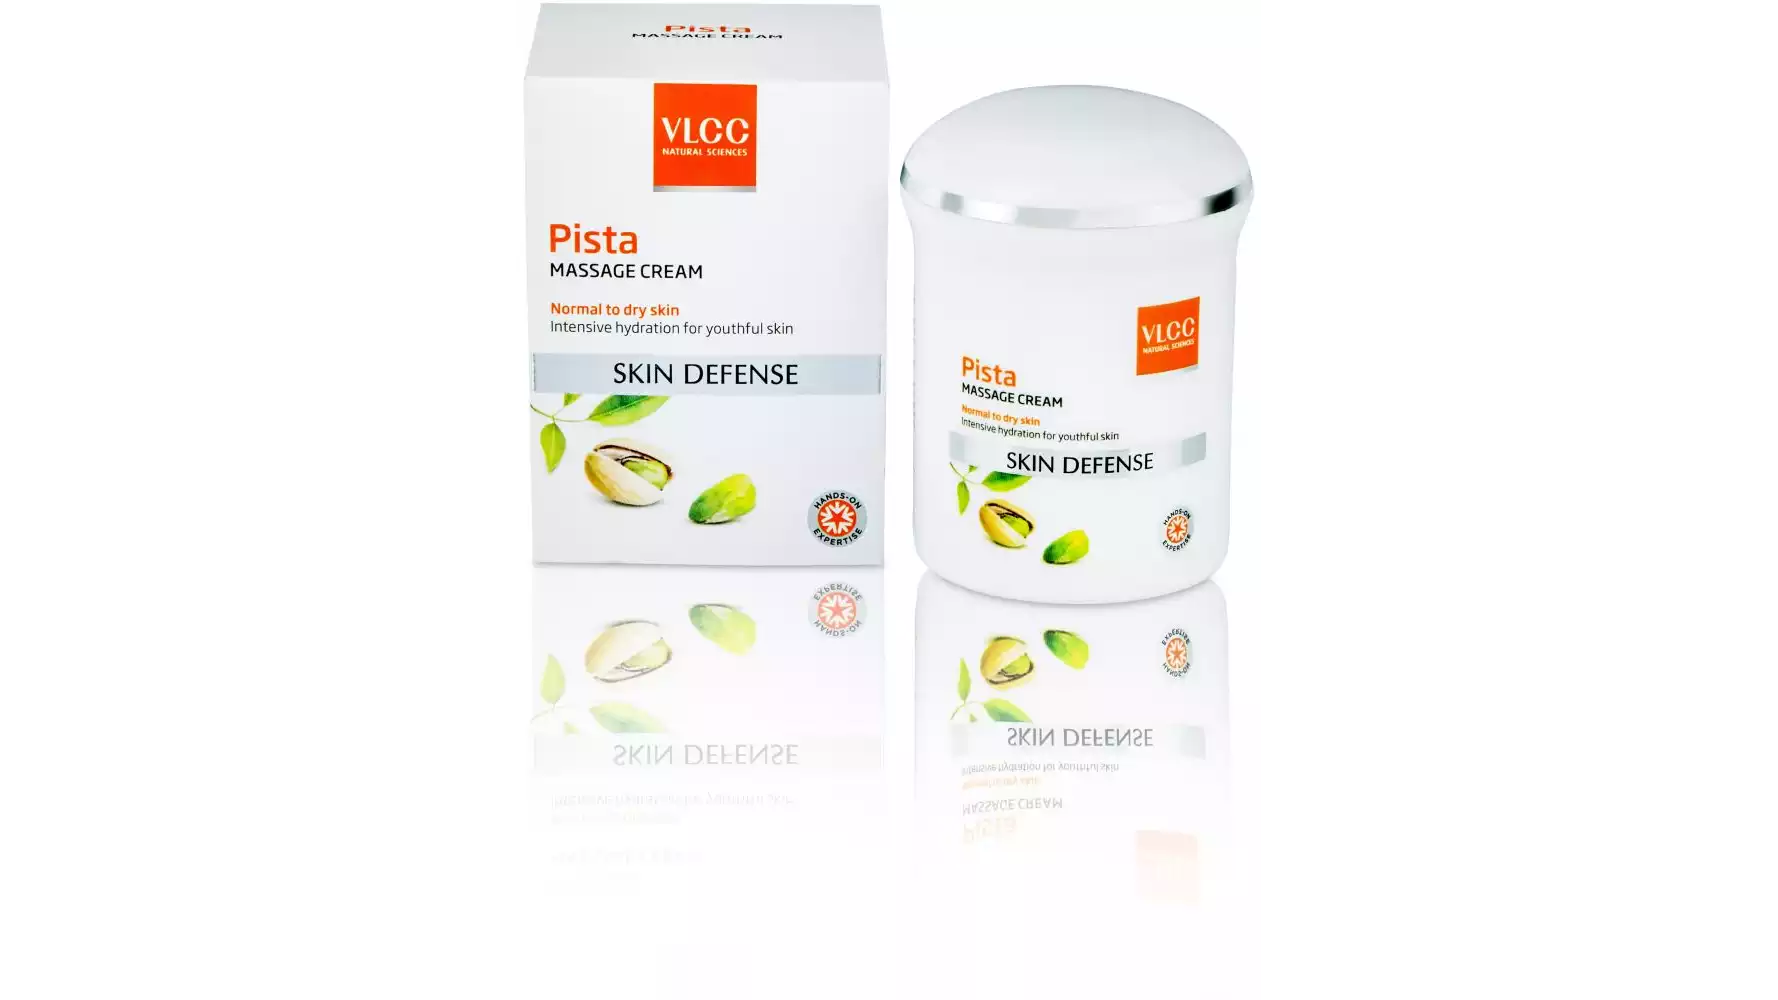 VLCC Pista Massage Cream (Normal To Dry Skin) (50g)